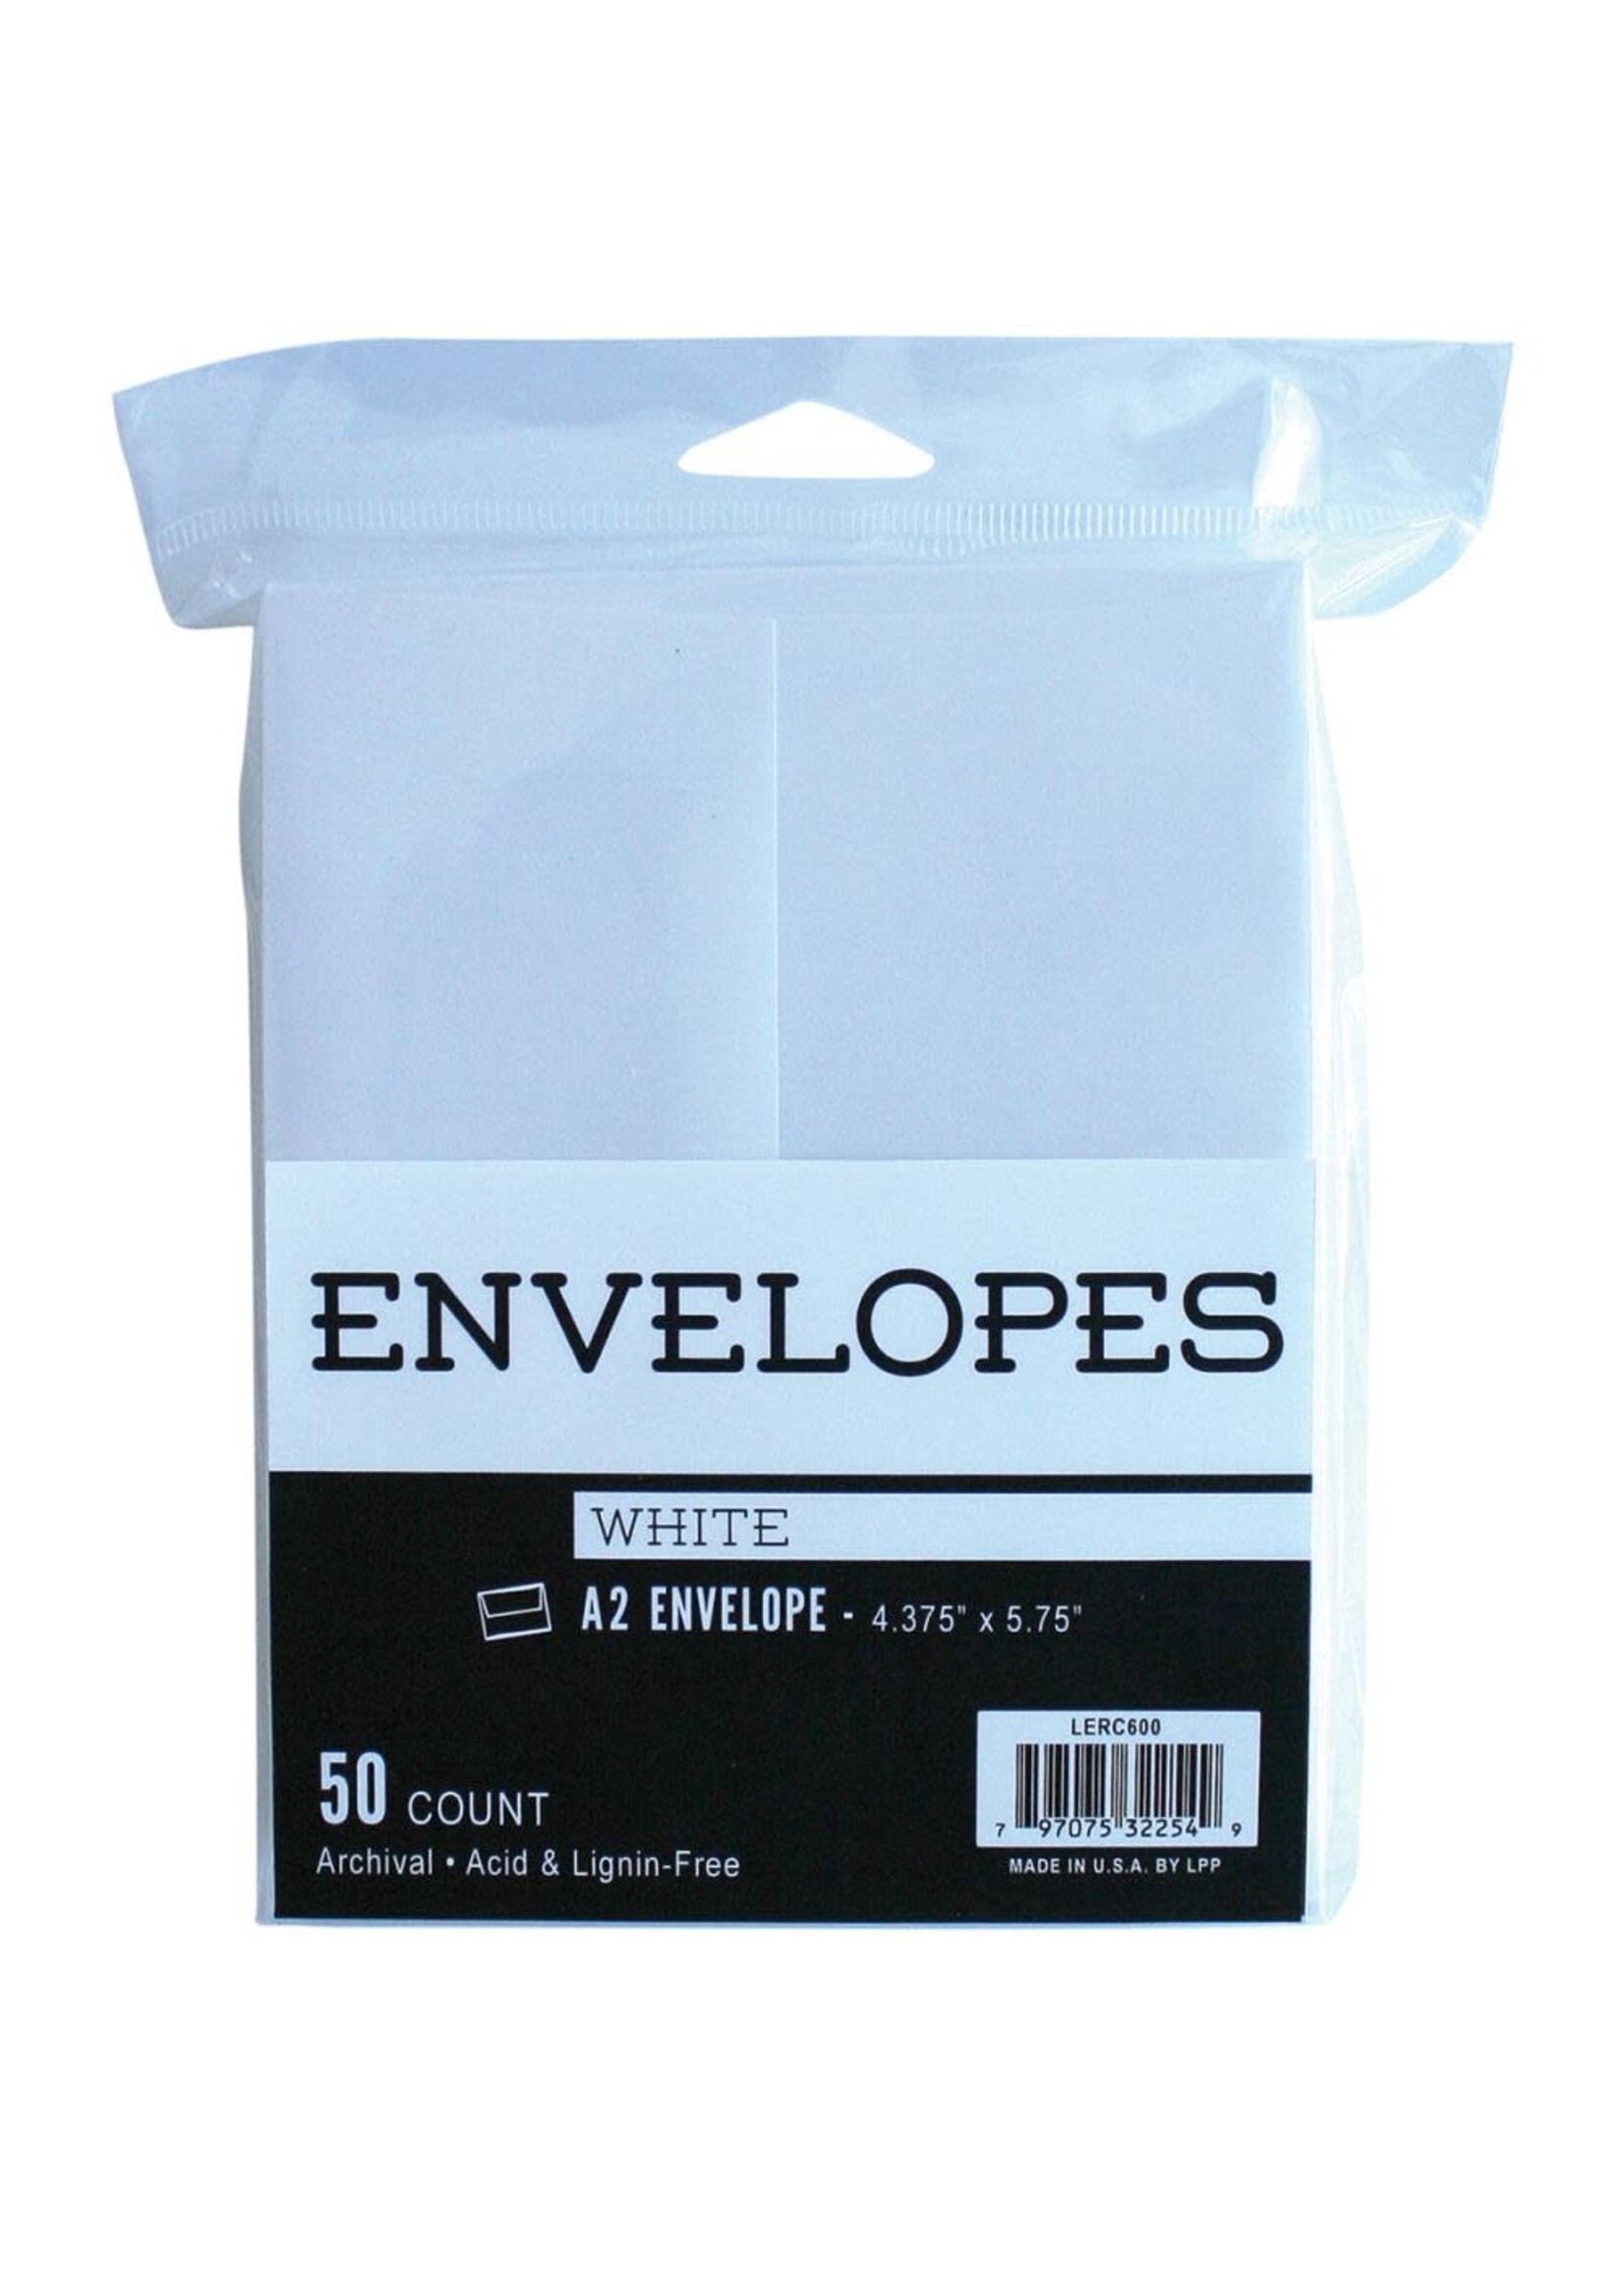 Leader A2 Envelopes, White (50 count)